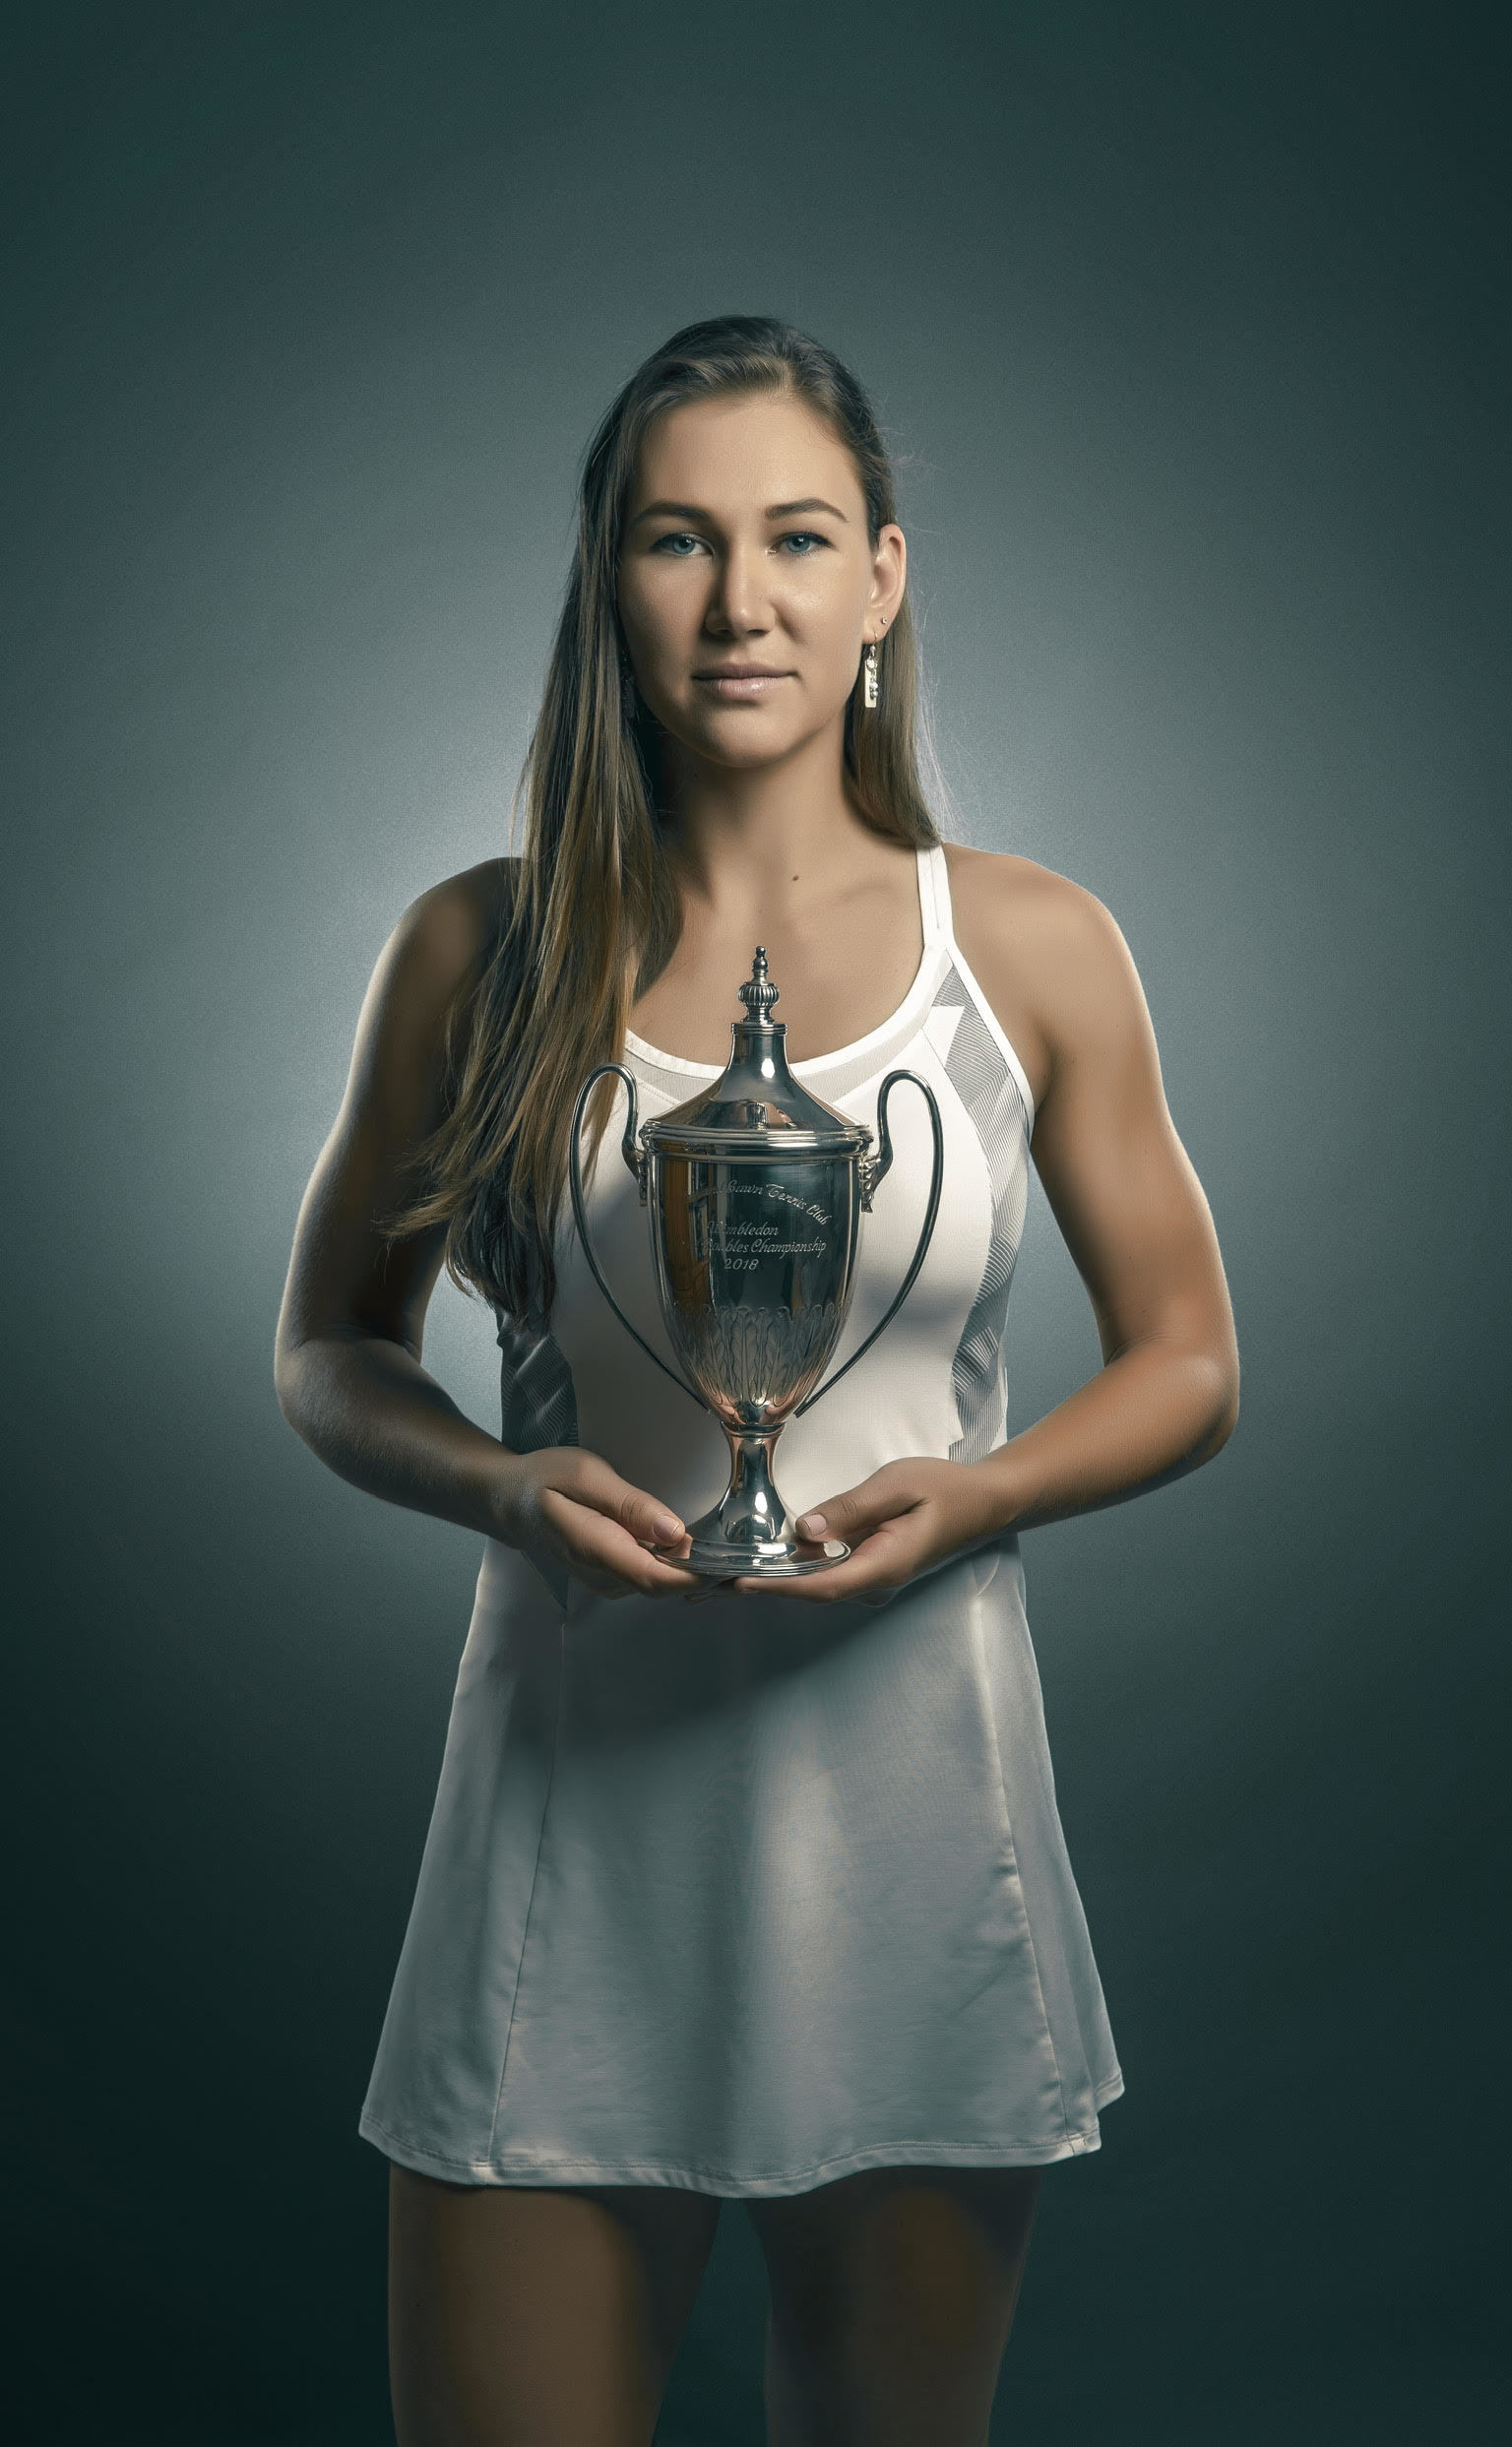 Nicole Melichar - Pro Tennis Player